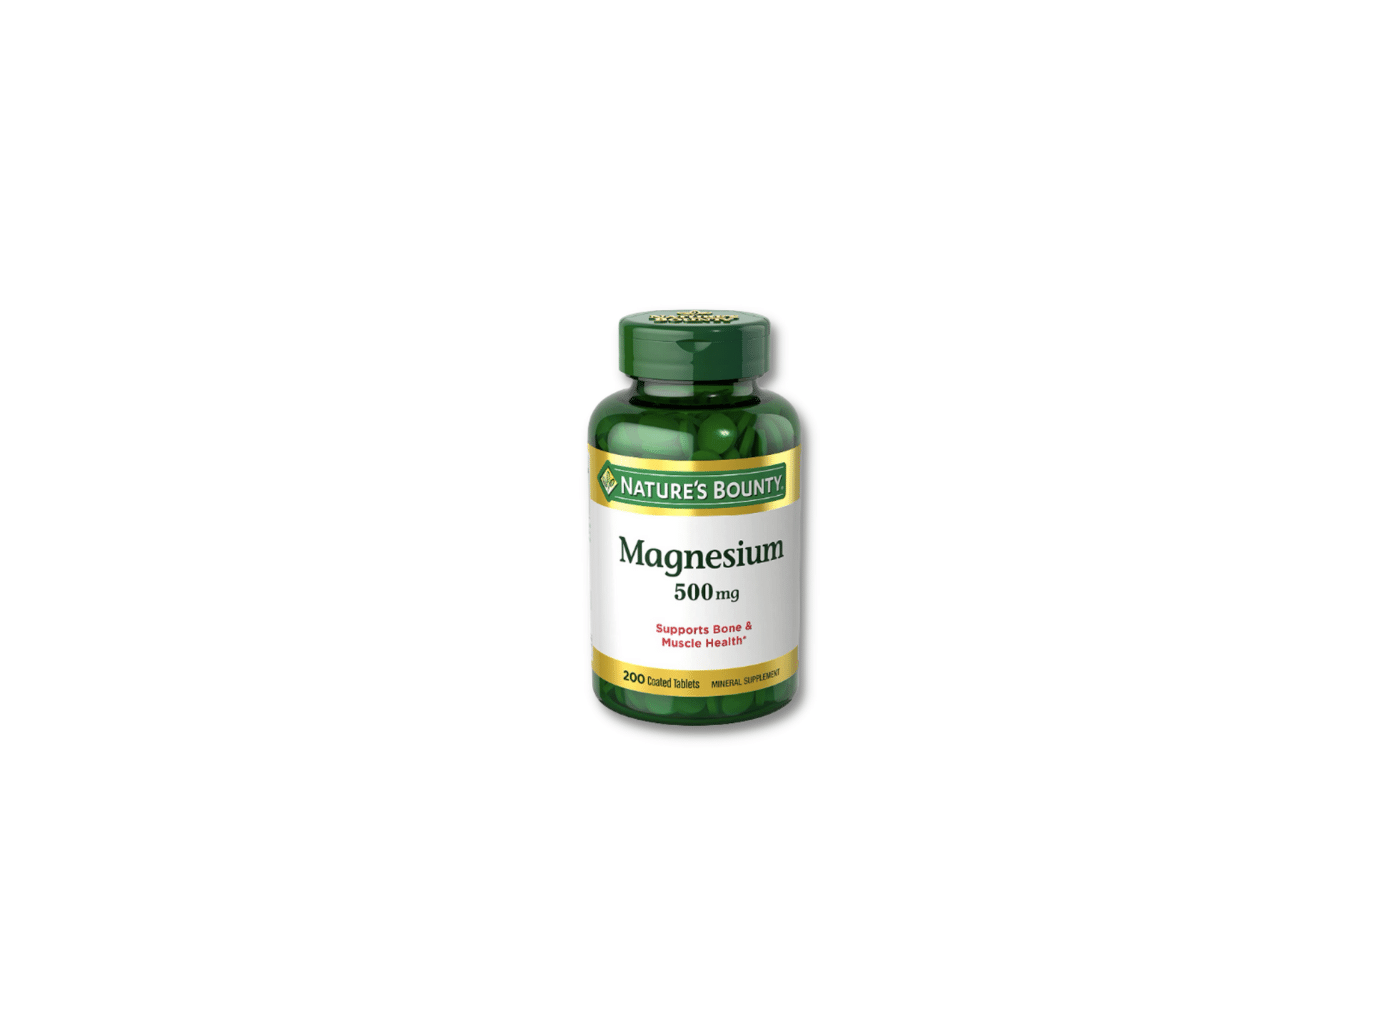 Nature’s Bounty Magnesium Supplements